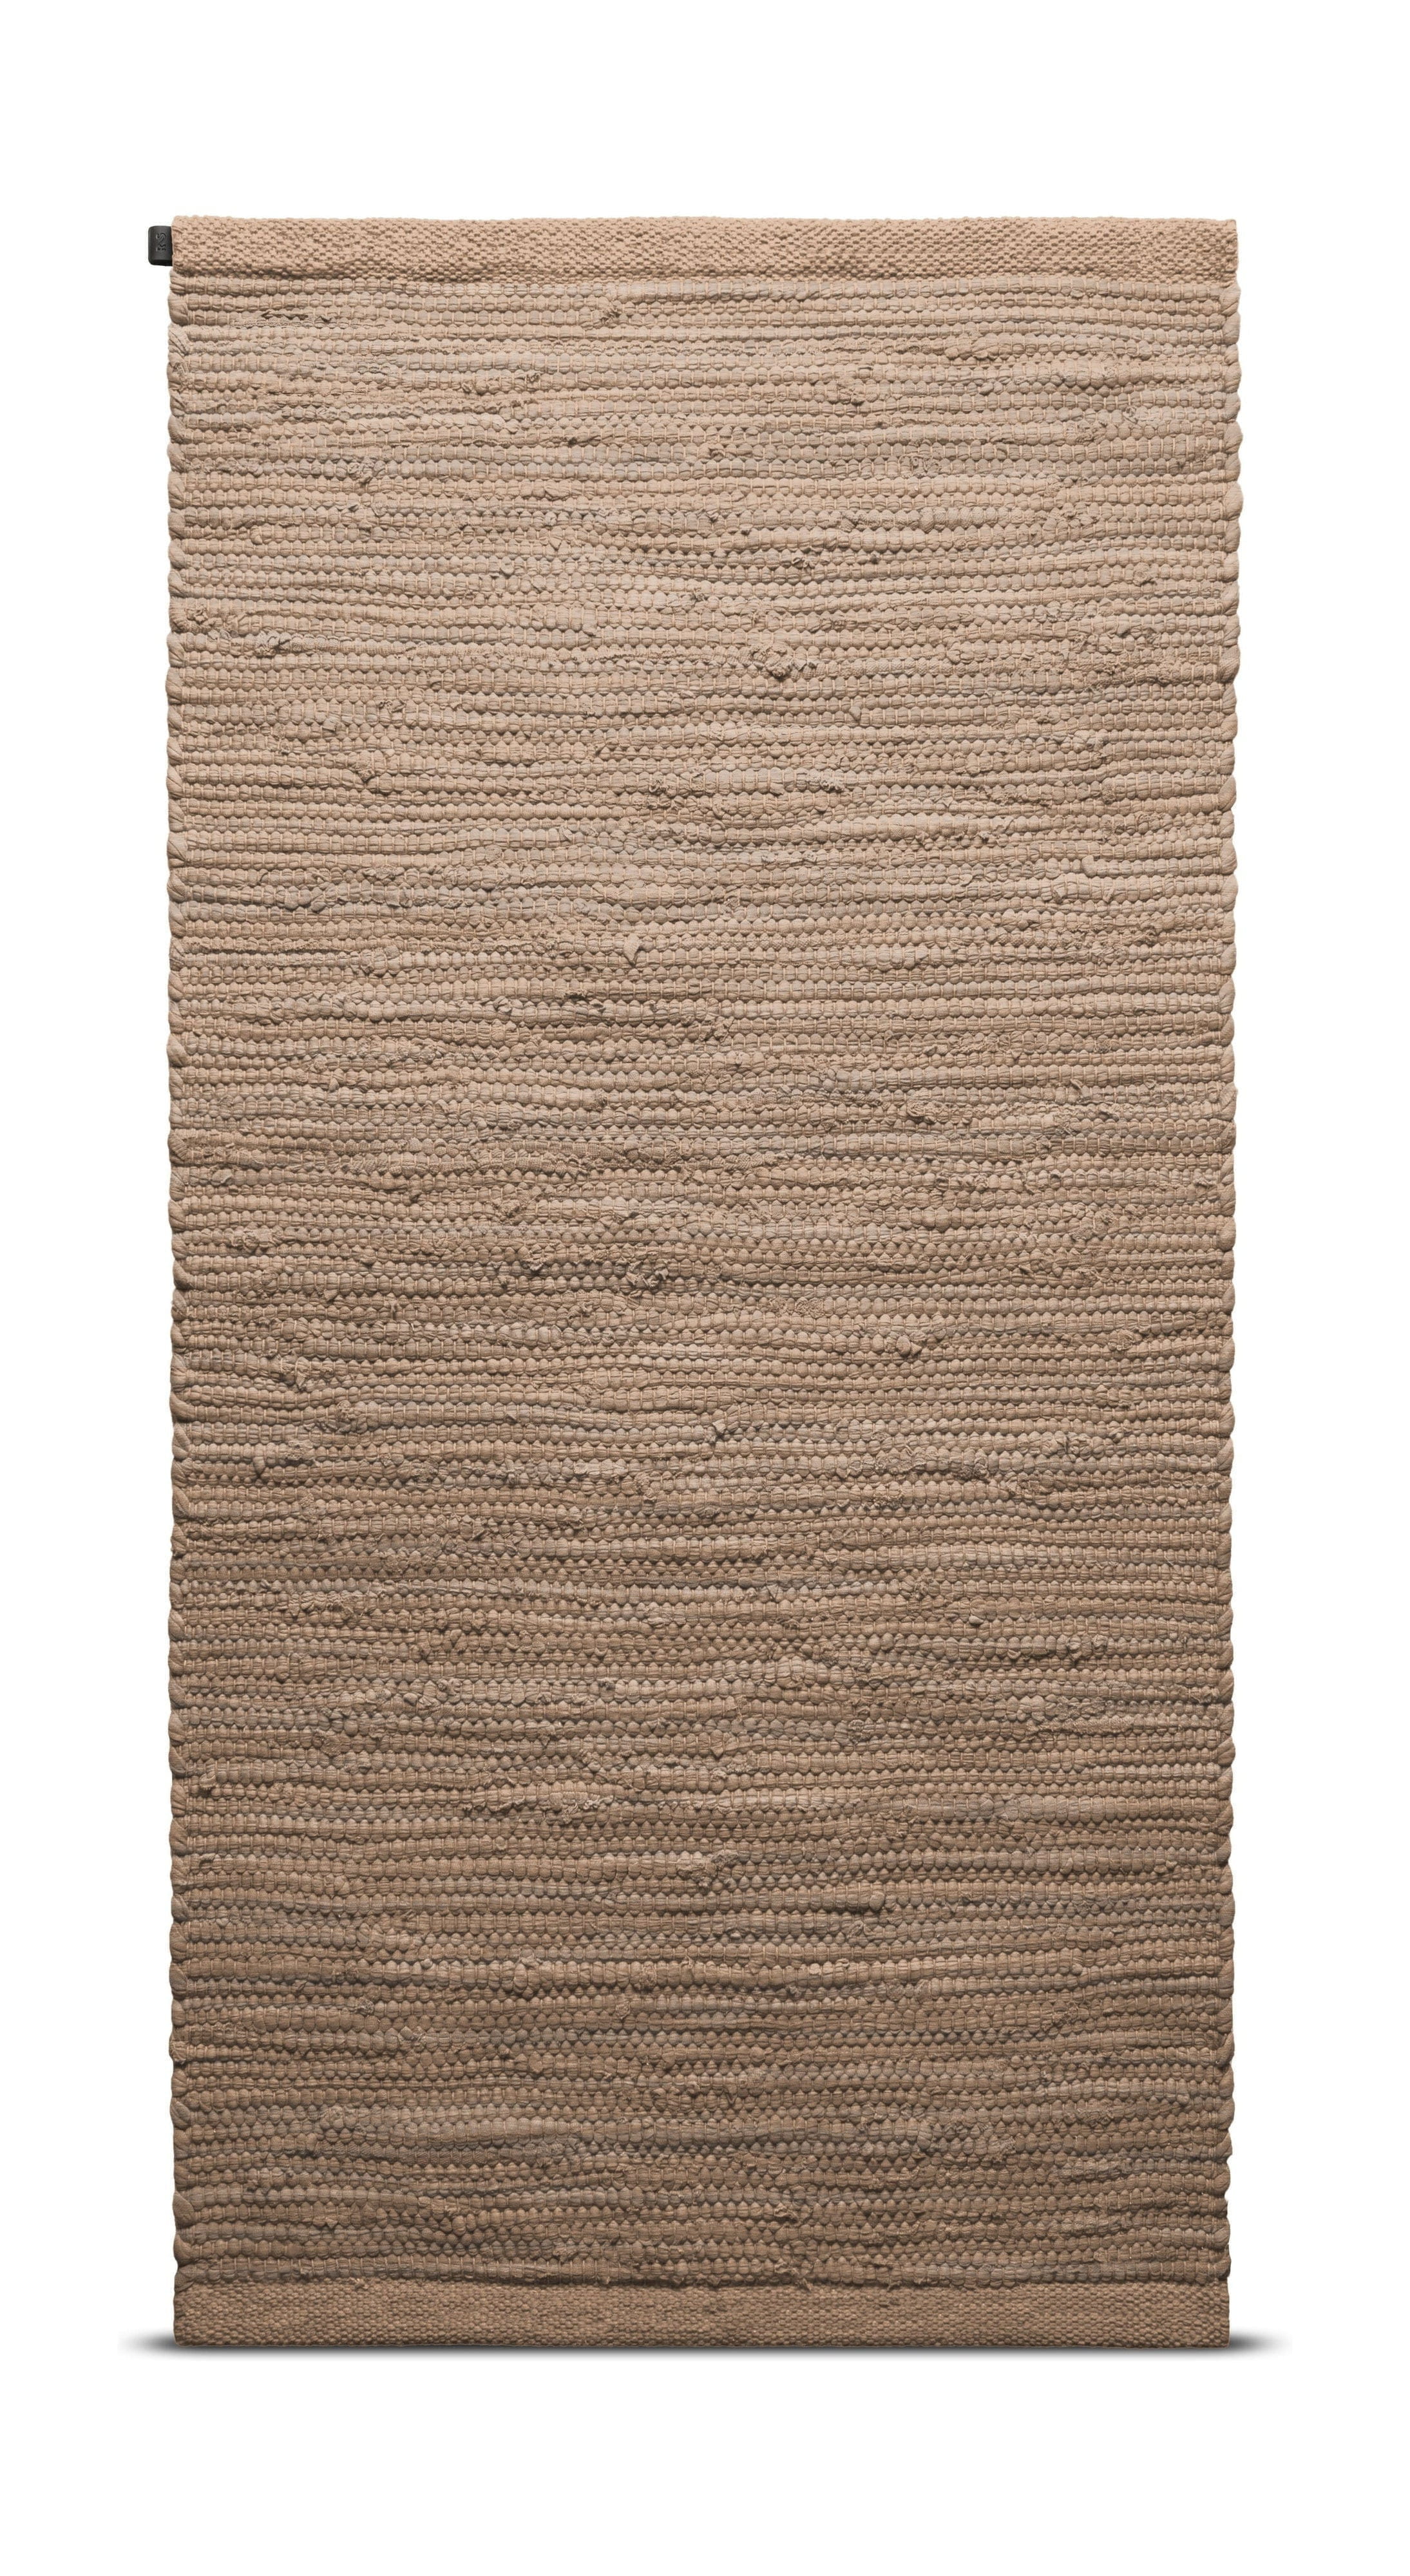 Teppi gegnheilt bómullarteppi 170 x 240 cm, Nougat